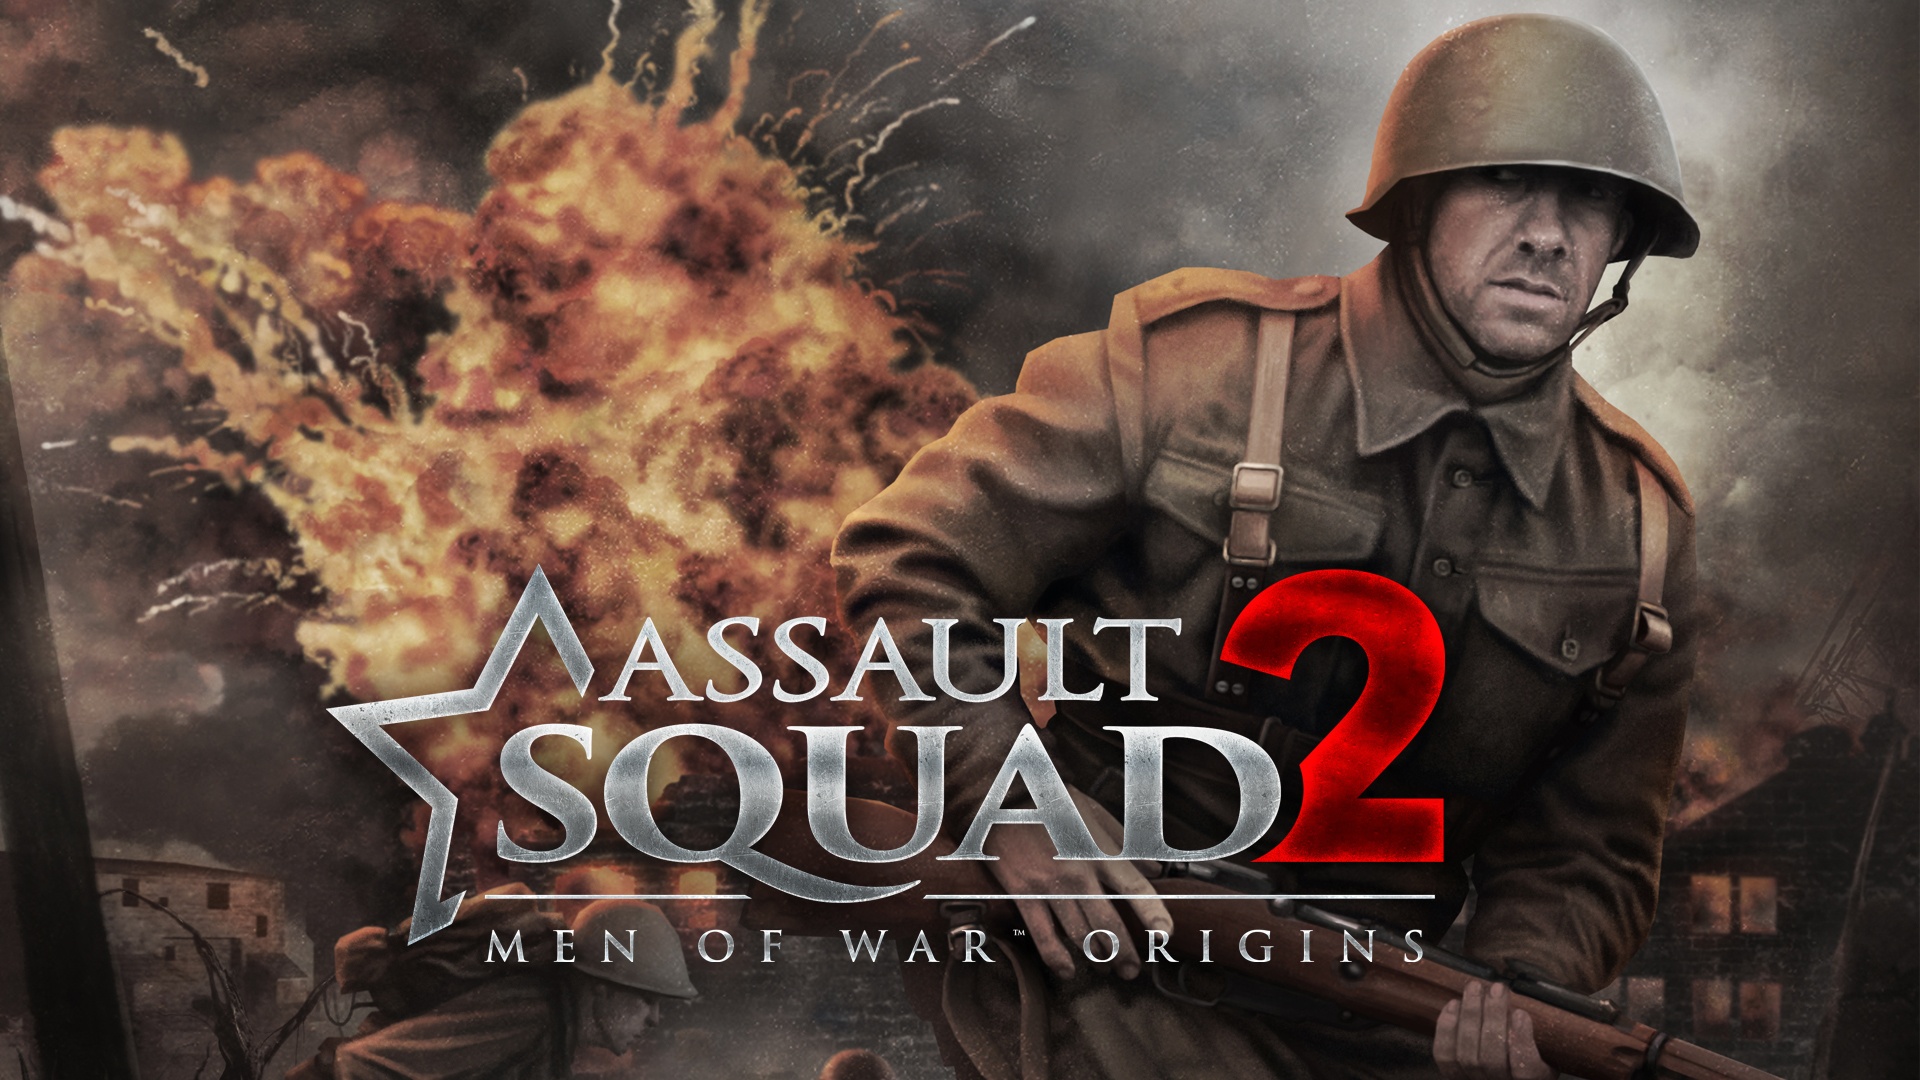 man of war assault squad